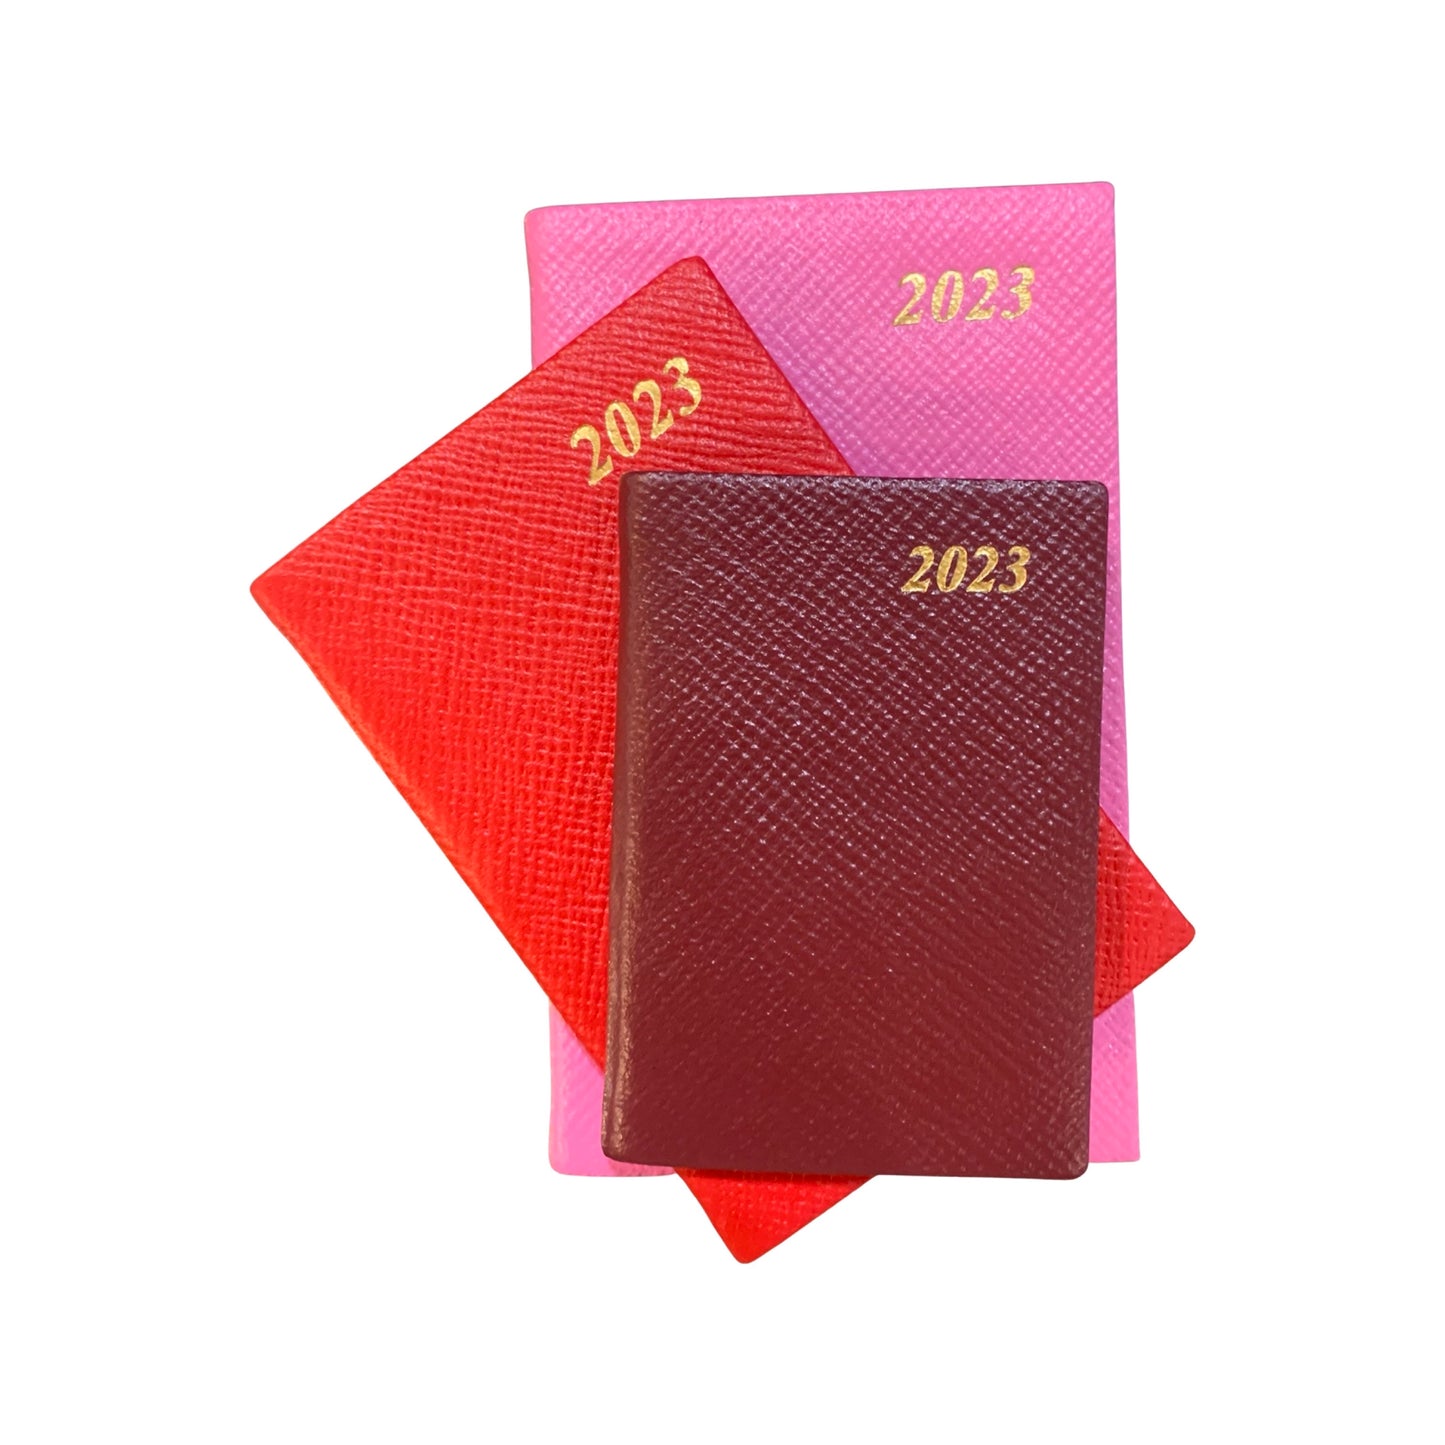 YEAR 2023 CROSSGRAIN Leather Pocket Calendar Book | 3 x 2" | D732L